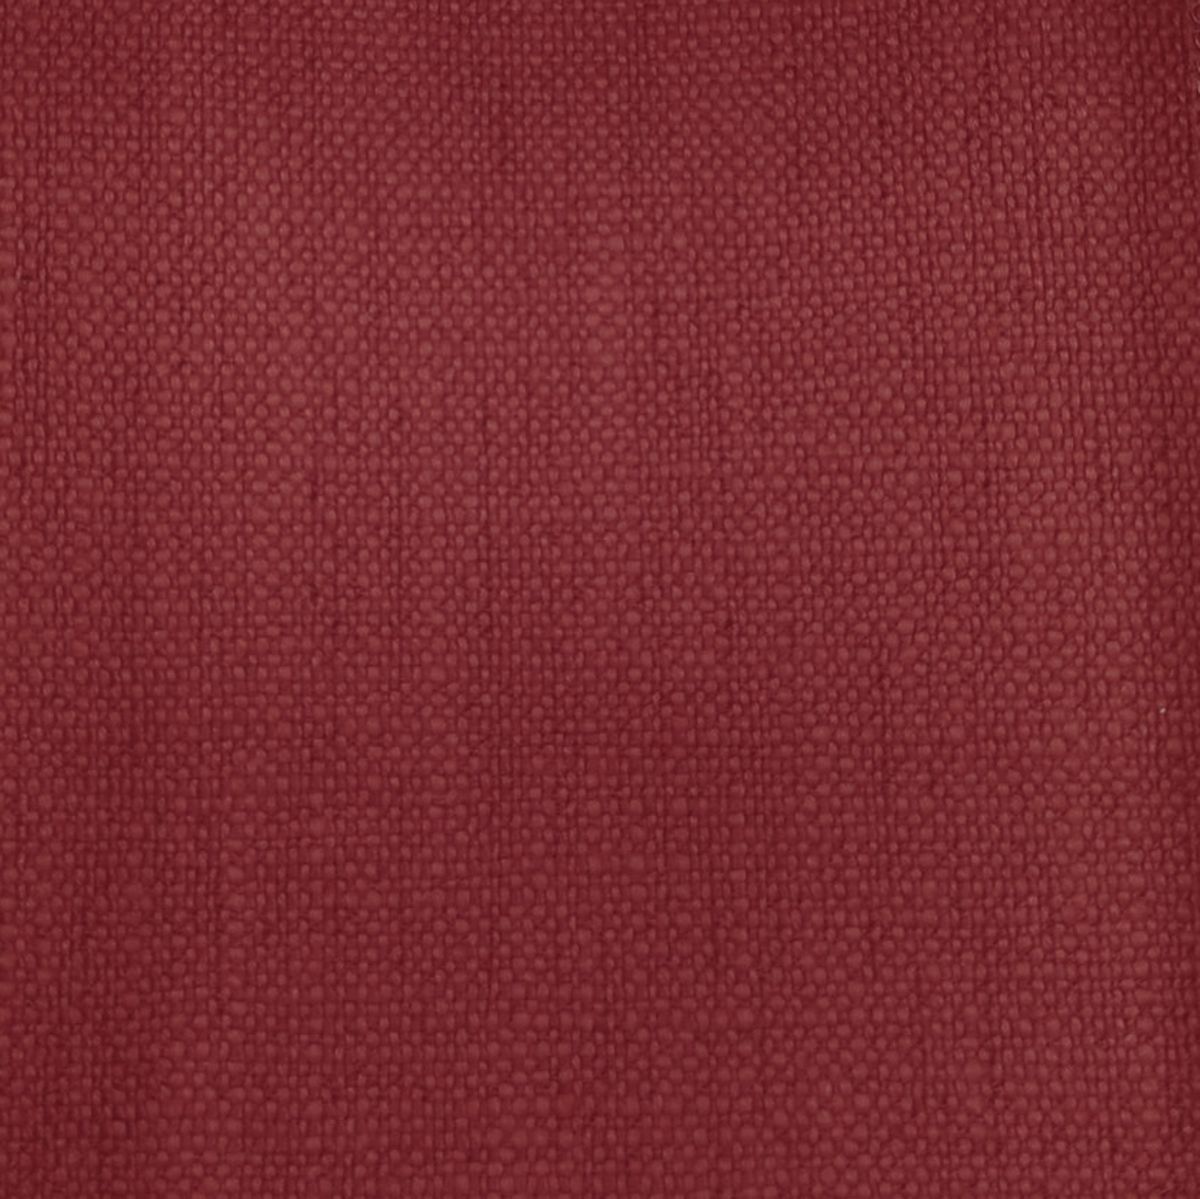 Trento Garnet Fabric by Voyage Maison